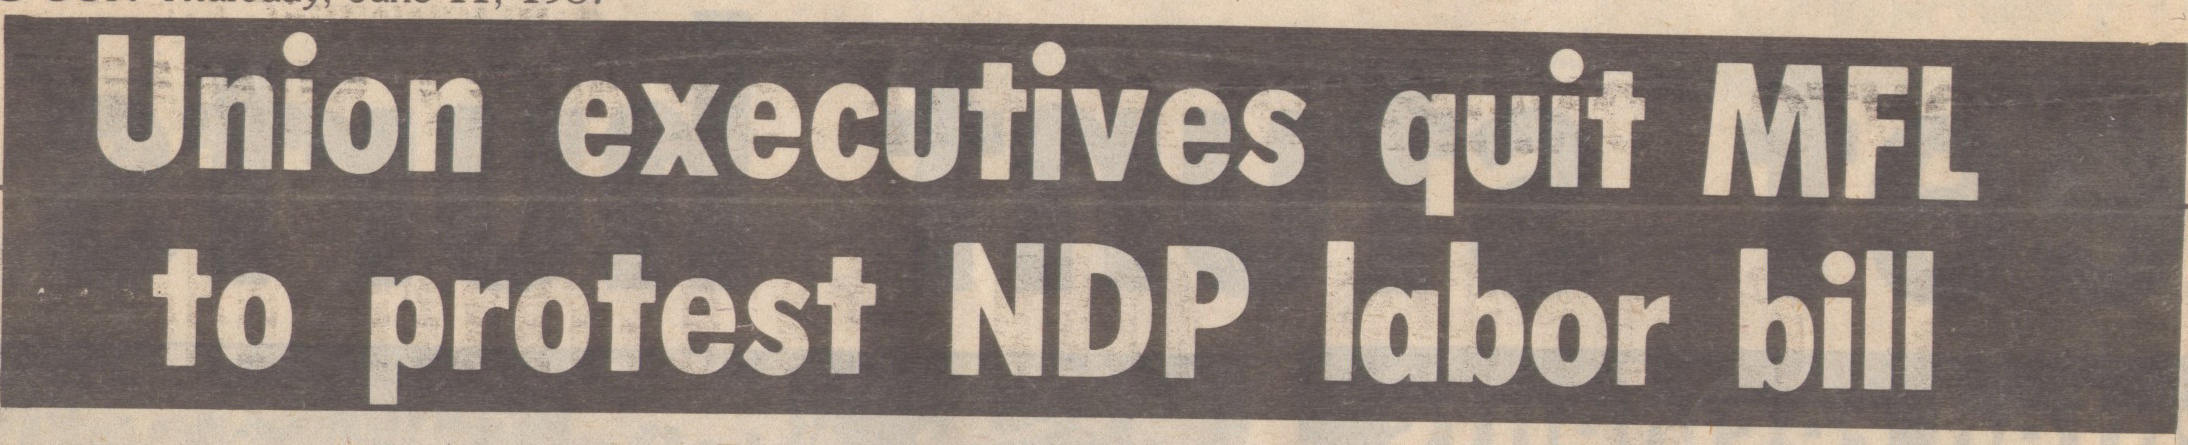 Banner Headline: Union executives quit MFL to protest NDP labor bill